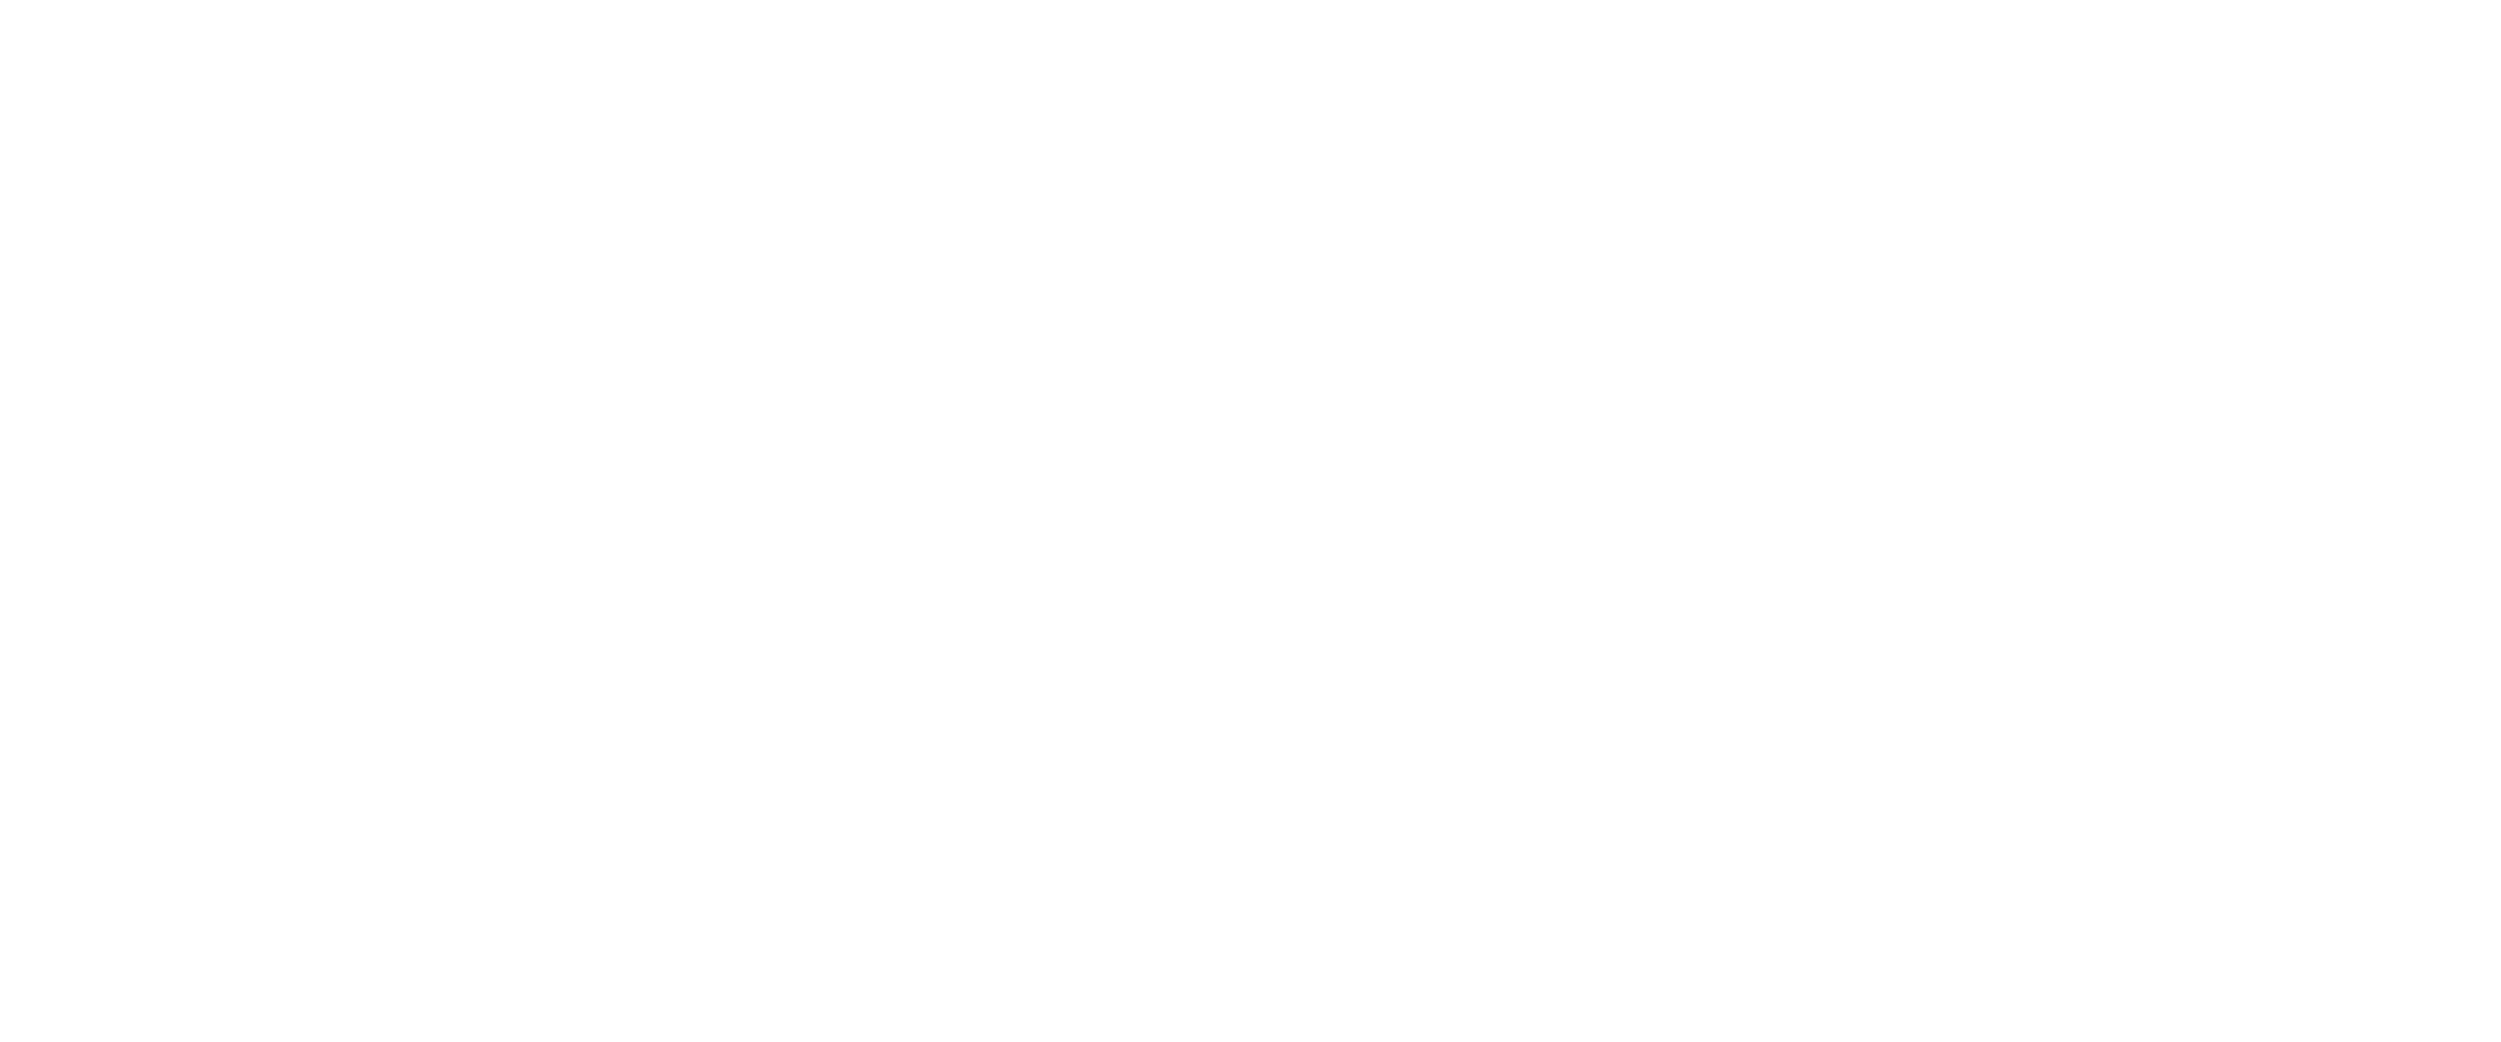 logo New Zealand Shop